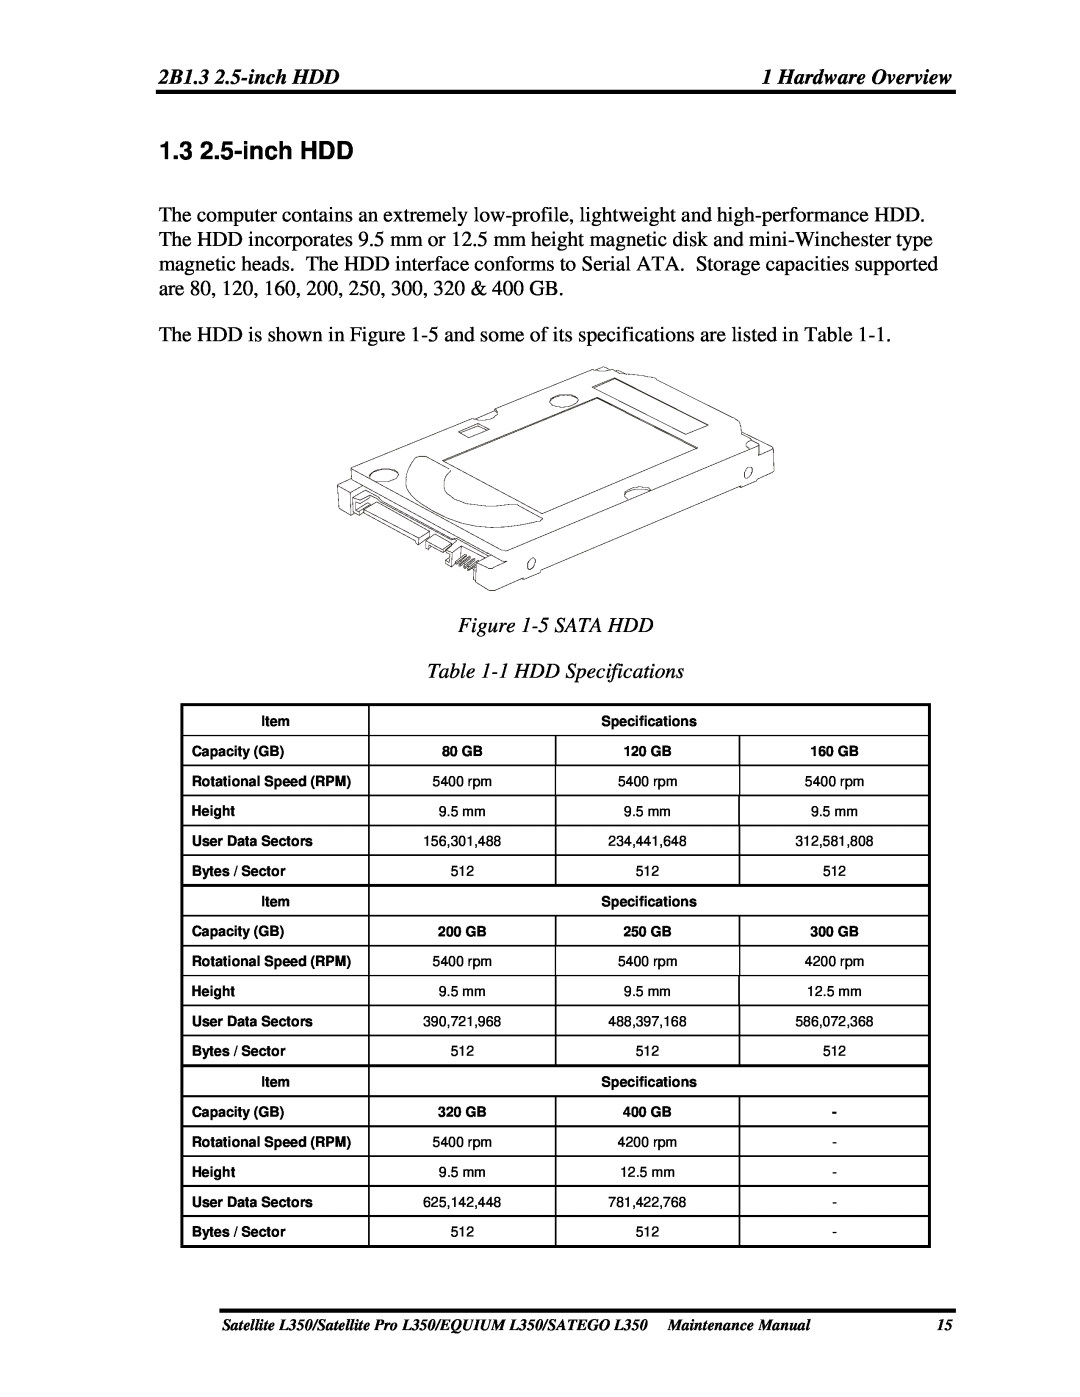 Toshiba PSLD2X, PSLD1X, PSLD3X manual 1.3 2.5-inch HDD, 5 SATA HDD -1 HDD Specifications 